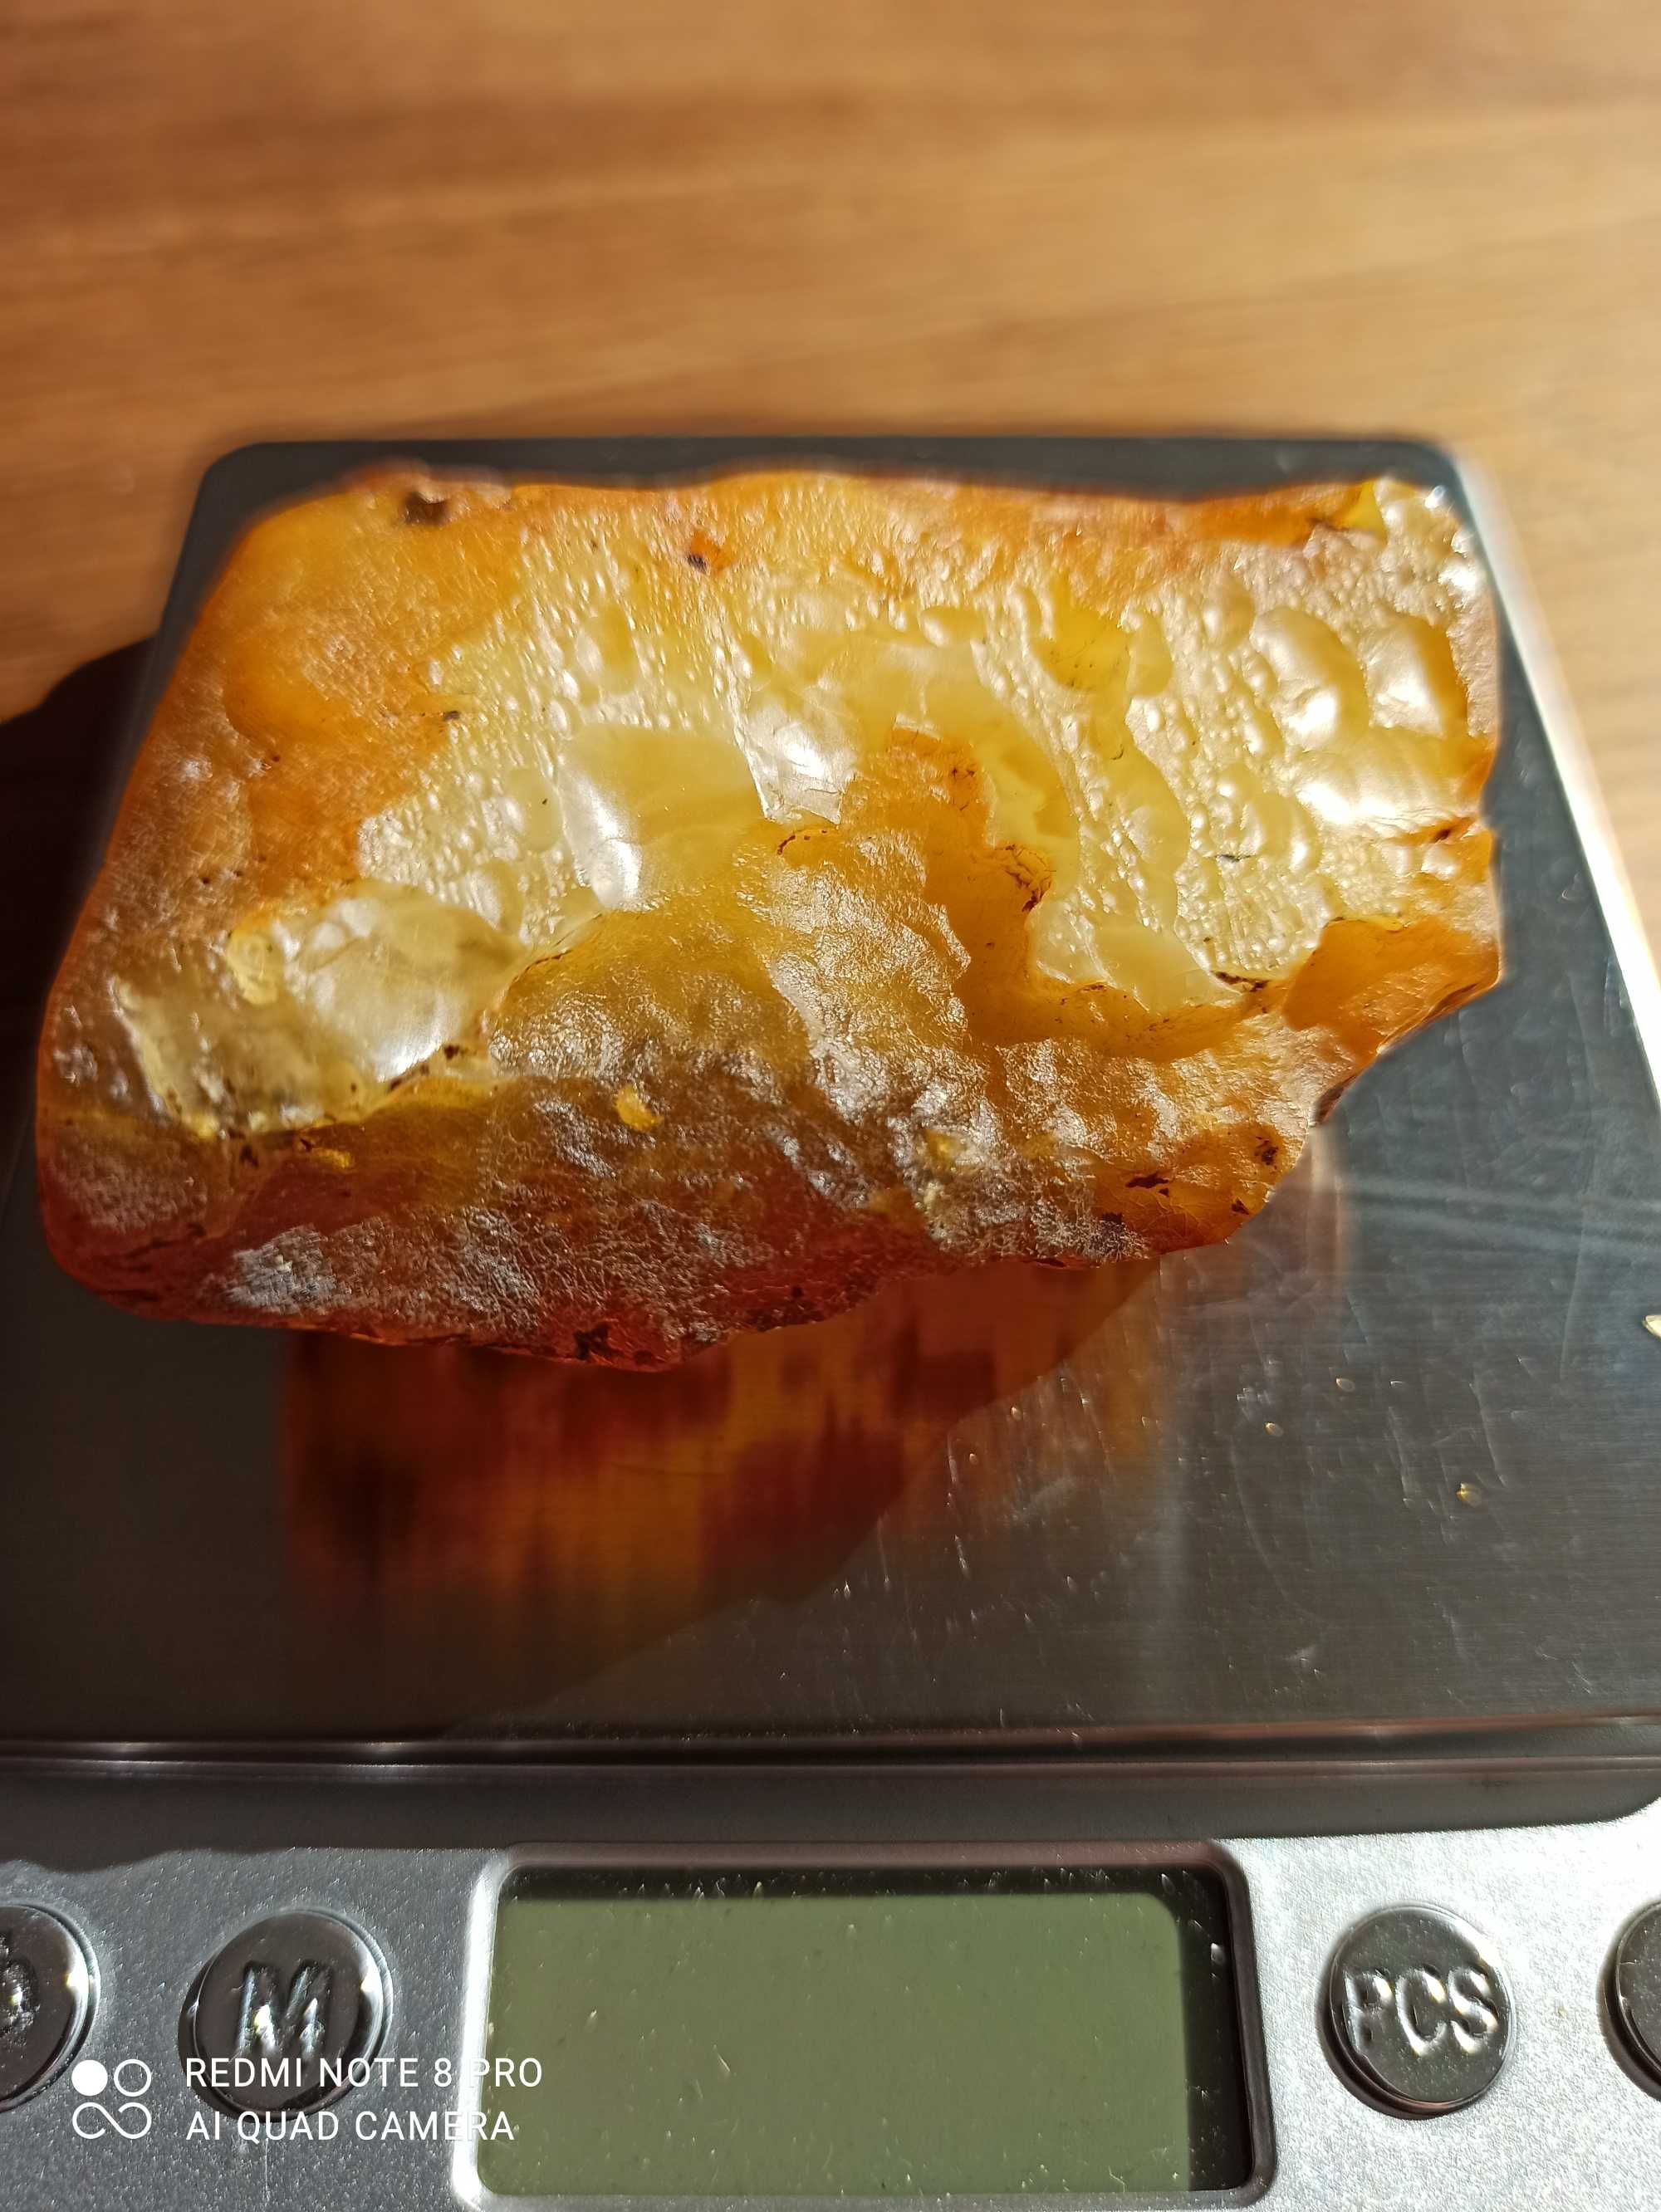 Bursztyn bałtycki 67.1 gram. Surowy